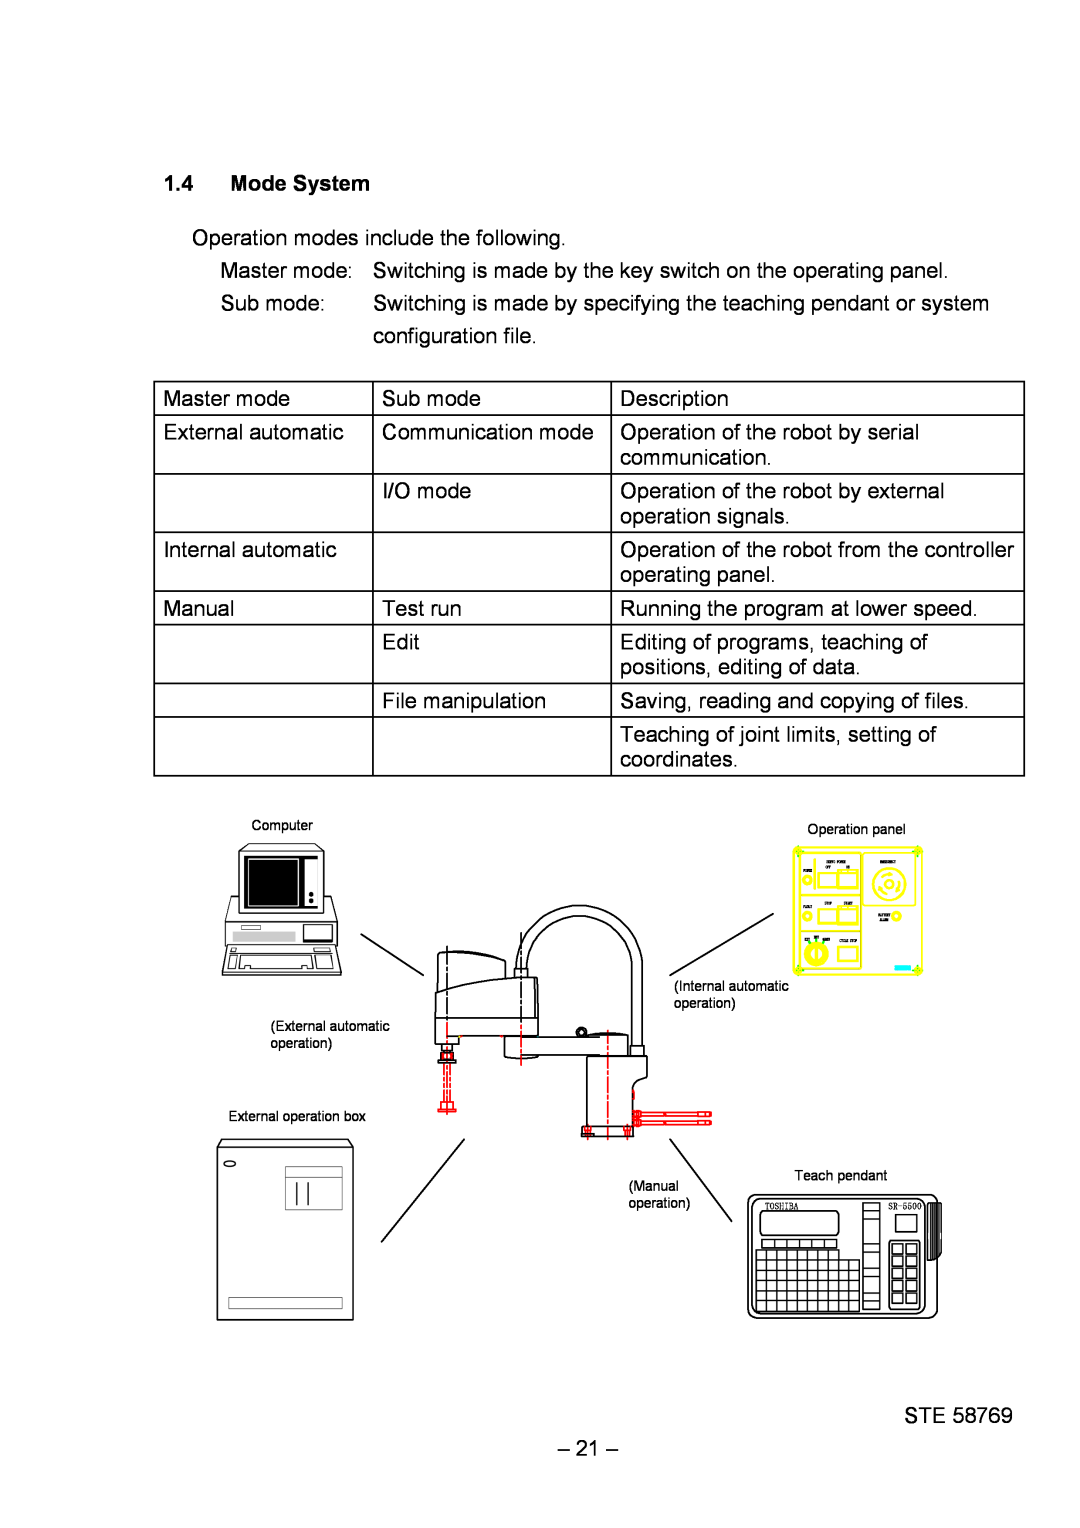 Toshiba SR-H Series instruction manual 1.4Mode System 